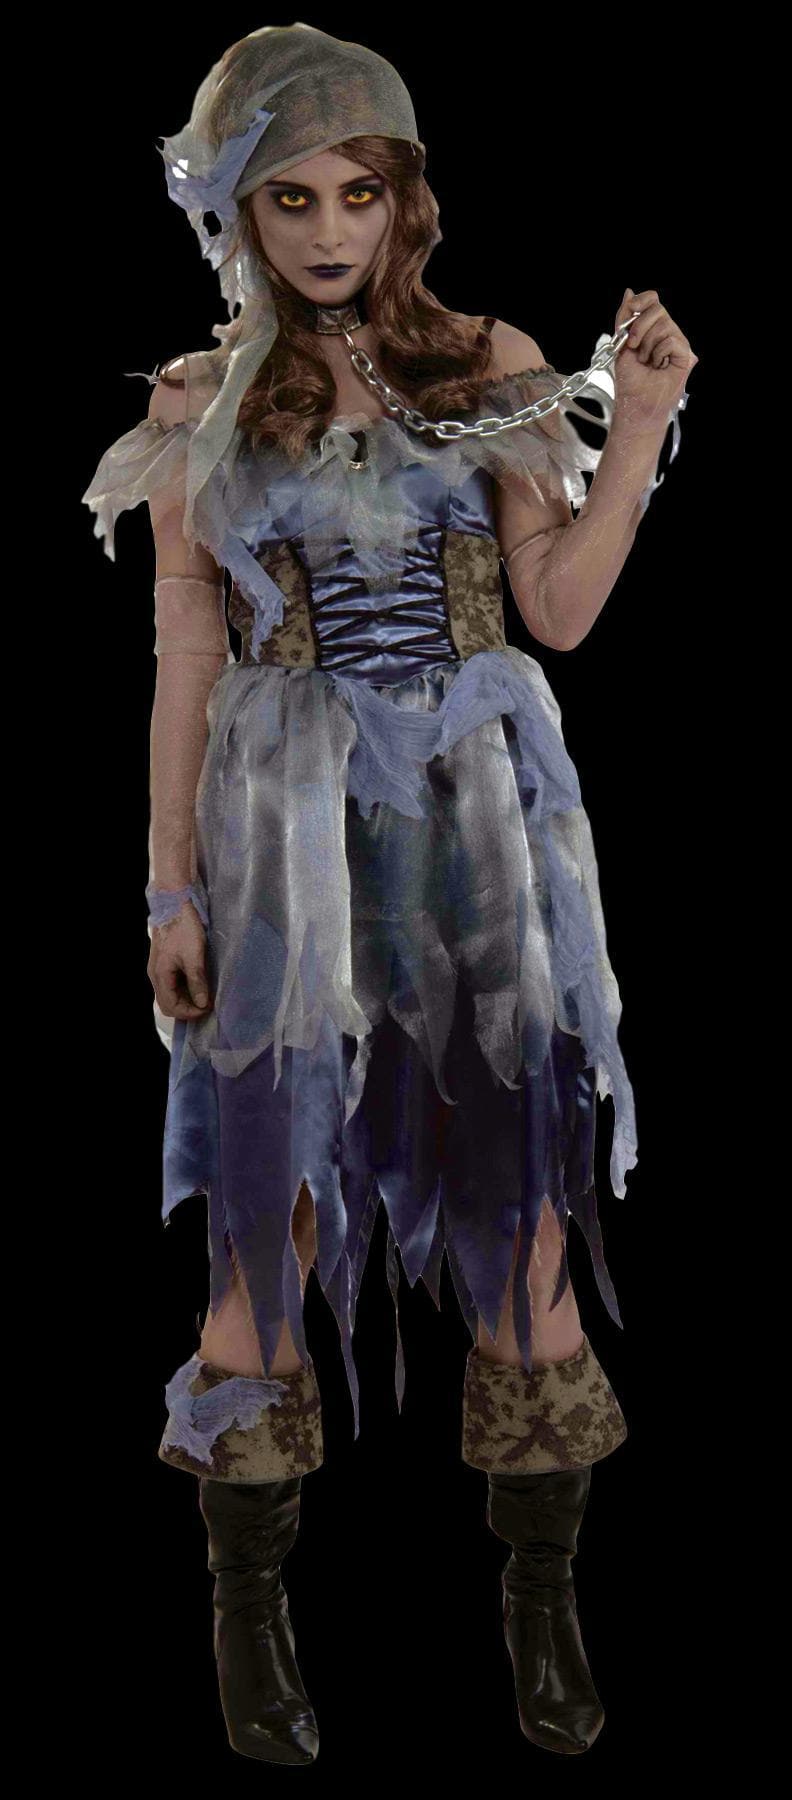 "Zombie Pirate" Women's Halloween Costume